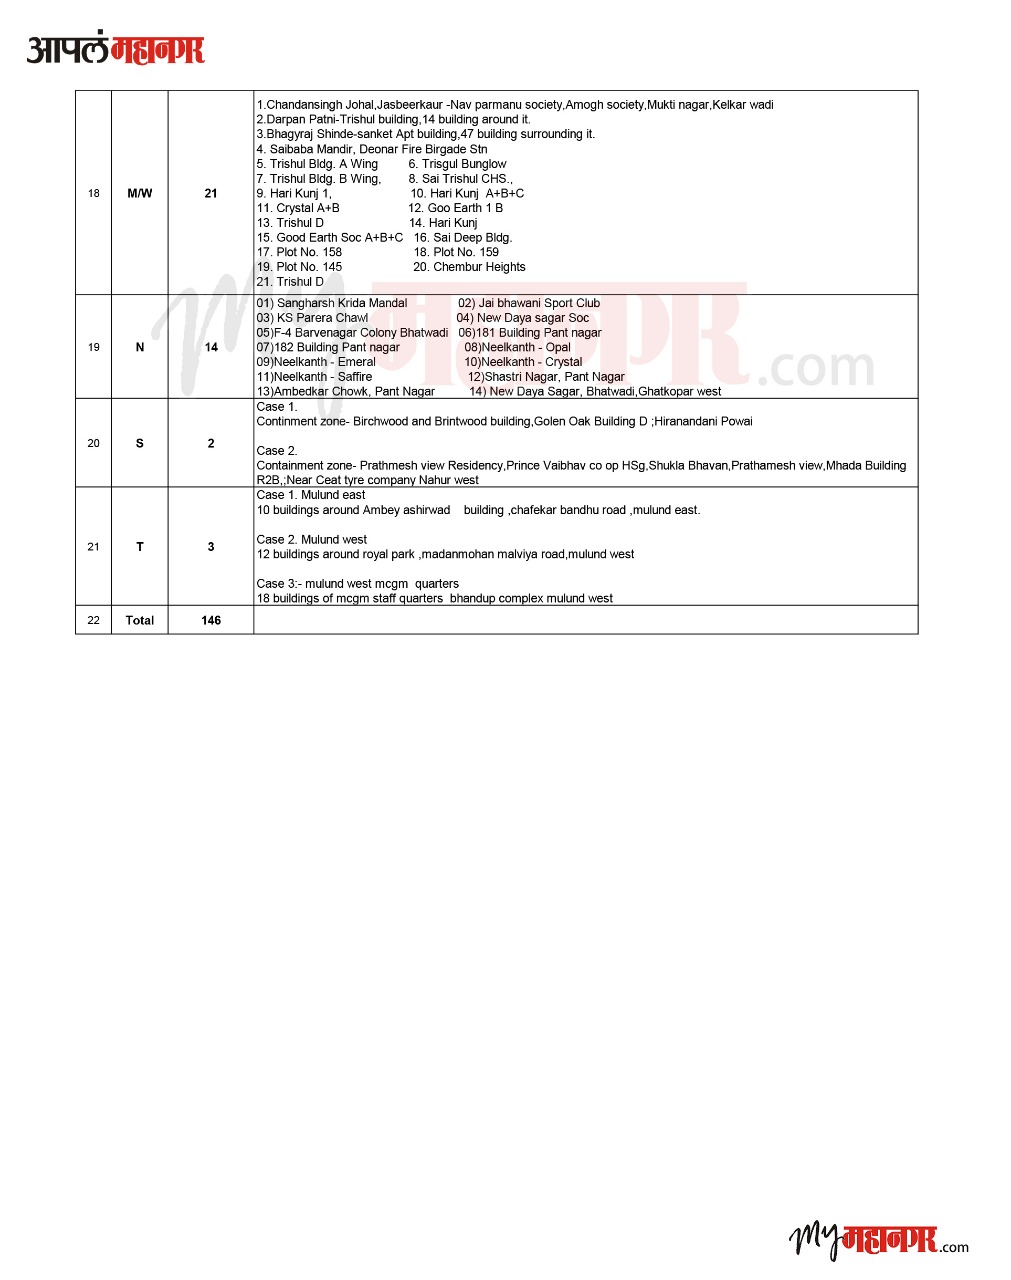 list of areas sealed in mumbai